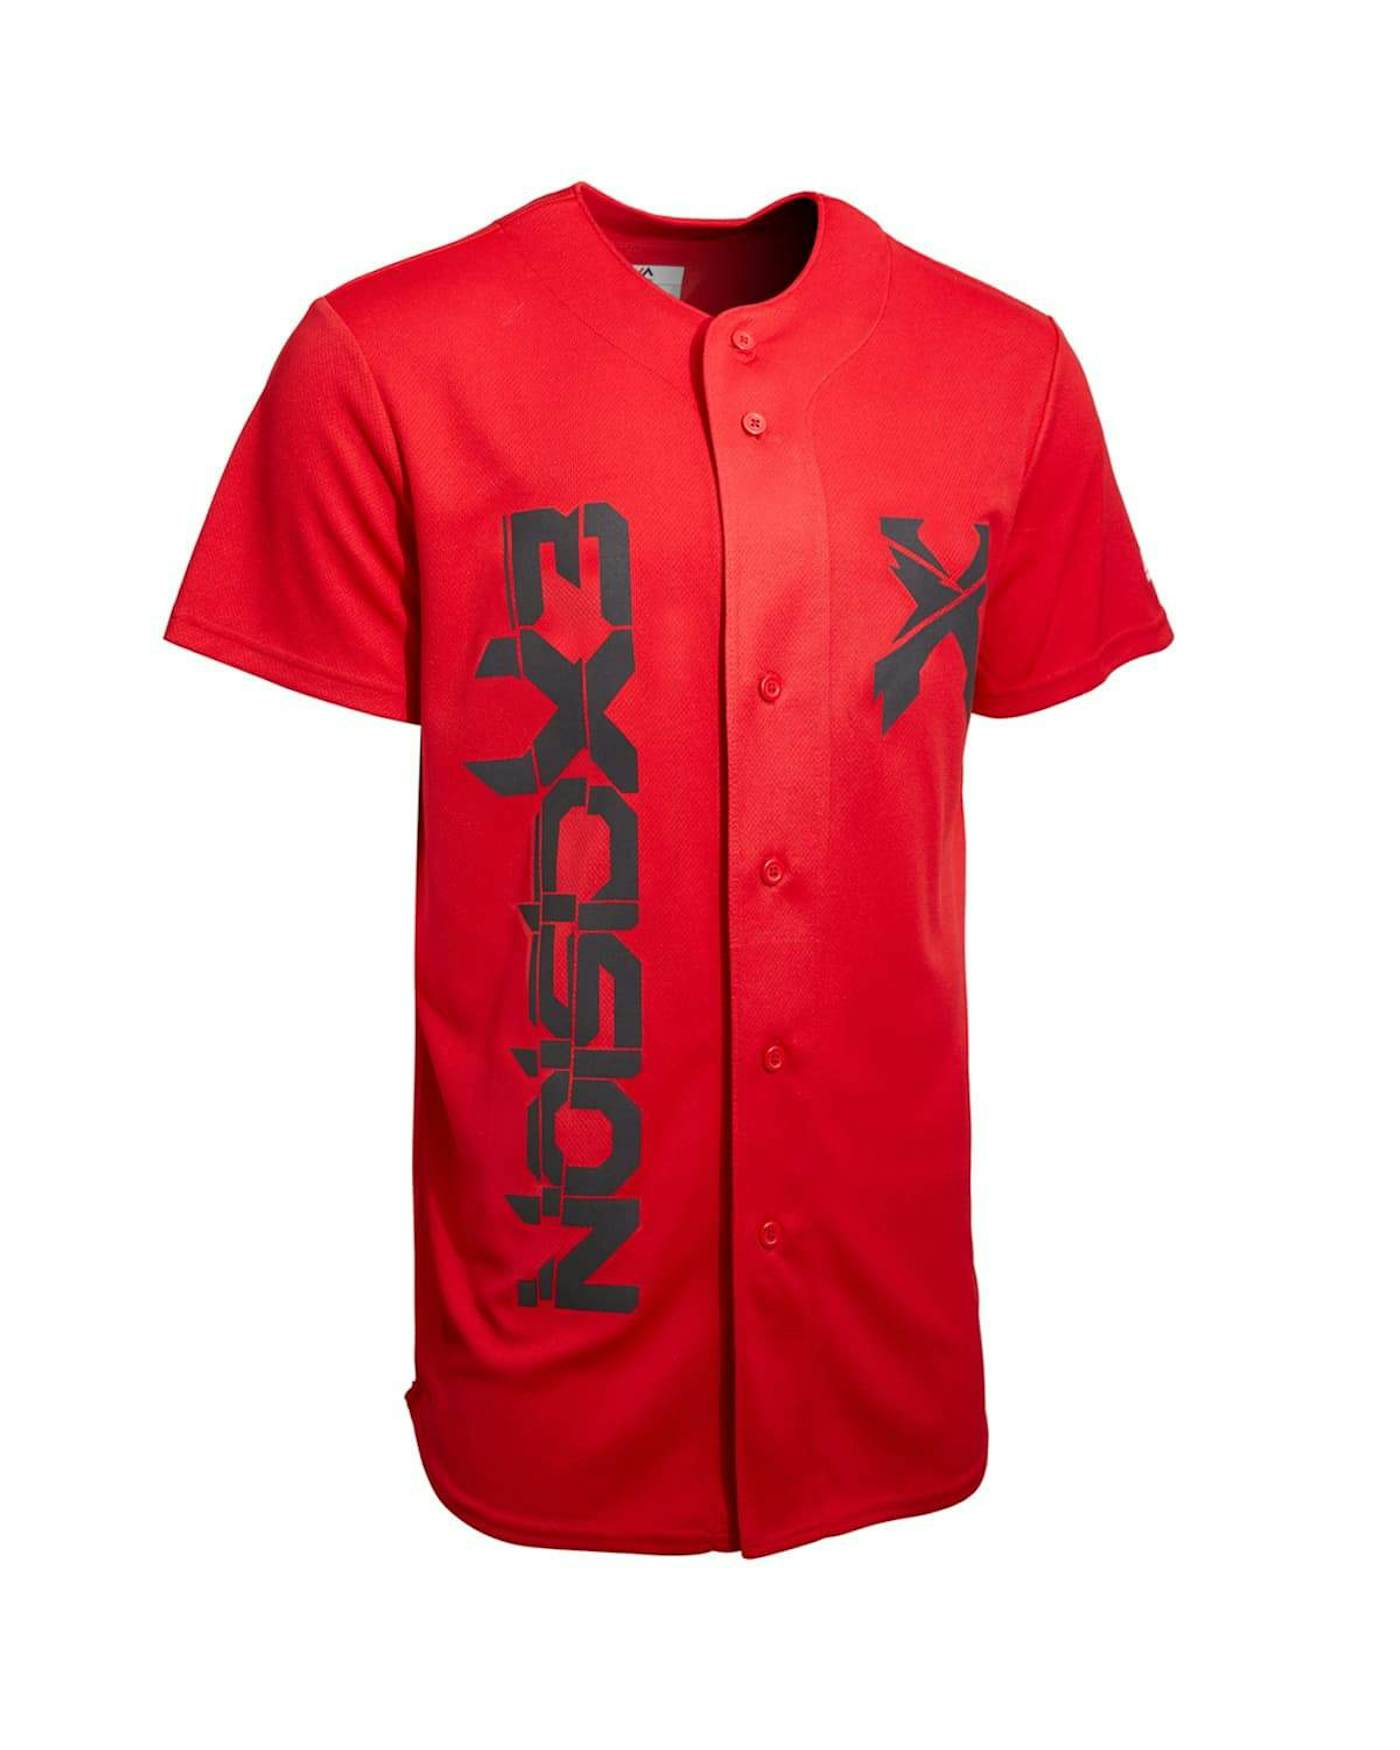 Headbanger Baseball Jersey (Neon Pink/Black Gradient)